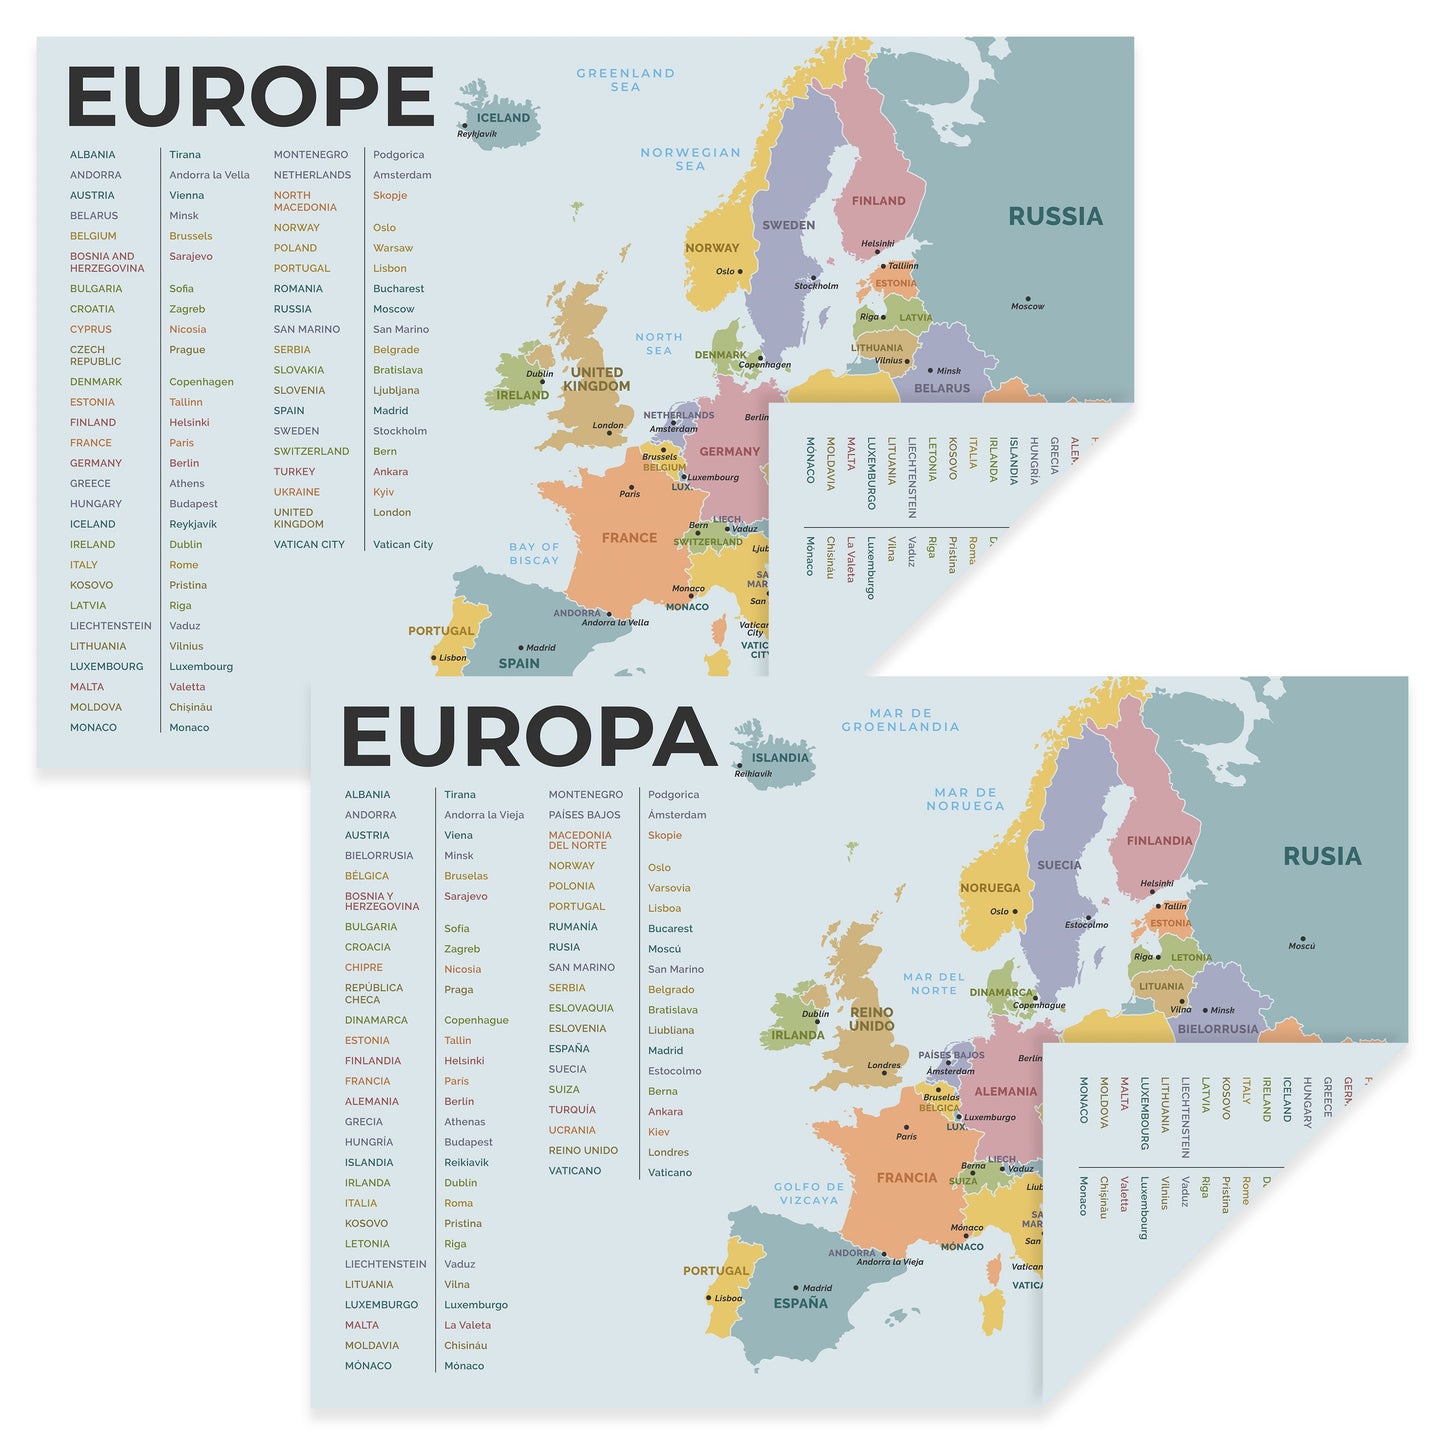 Quarterhouse English-Spanish Educational Map - Europe (Europa) Poster, Spanish and ESL Classroom Materials for Teachers